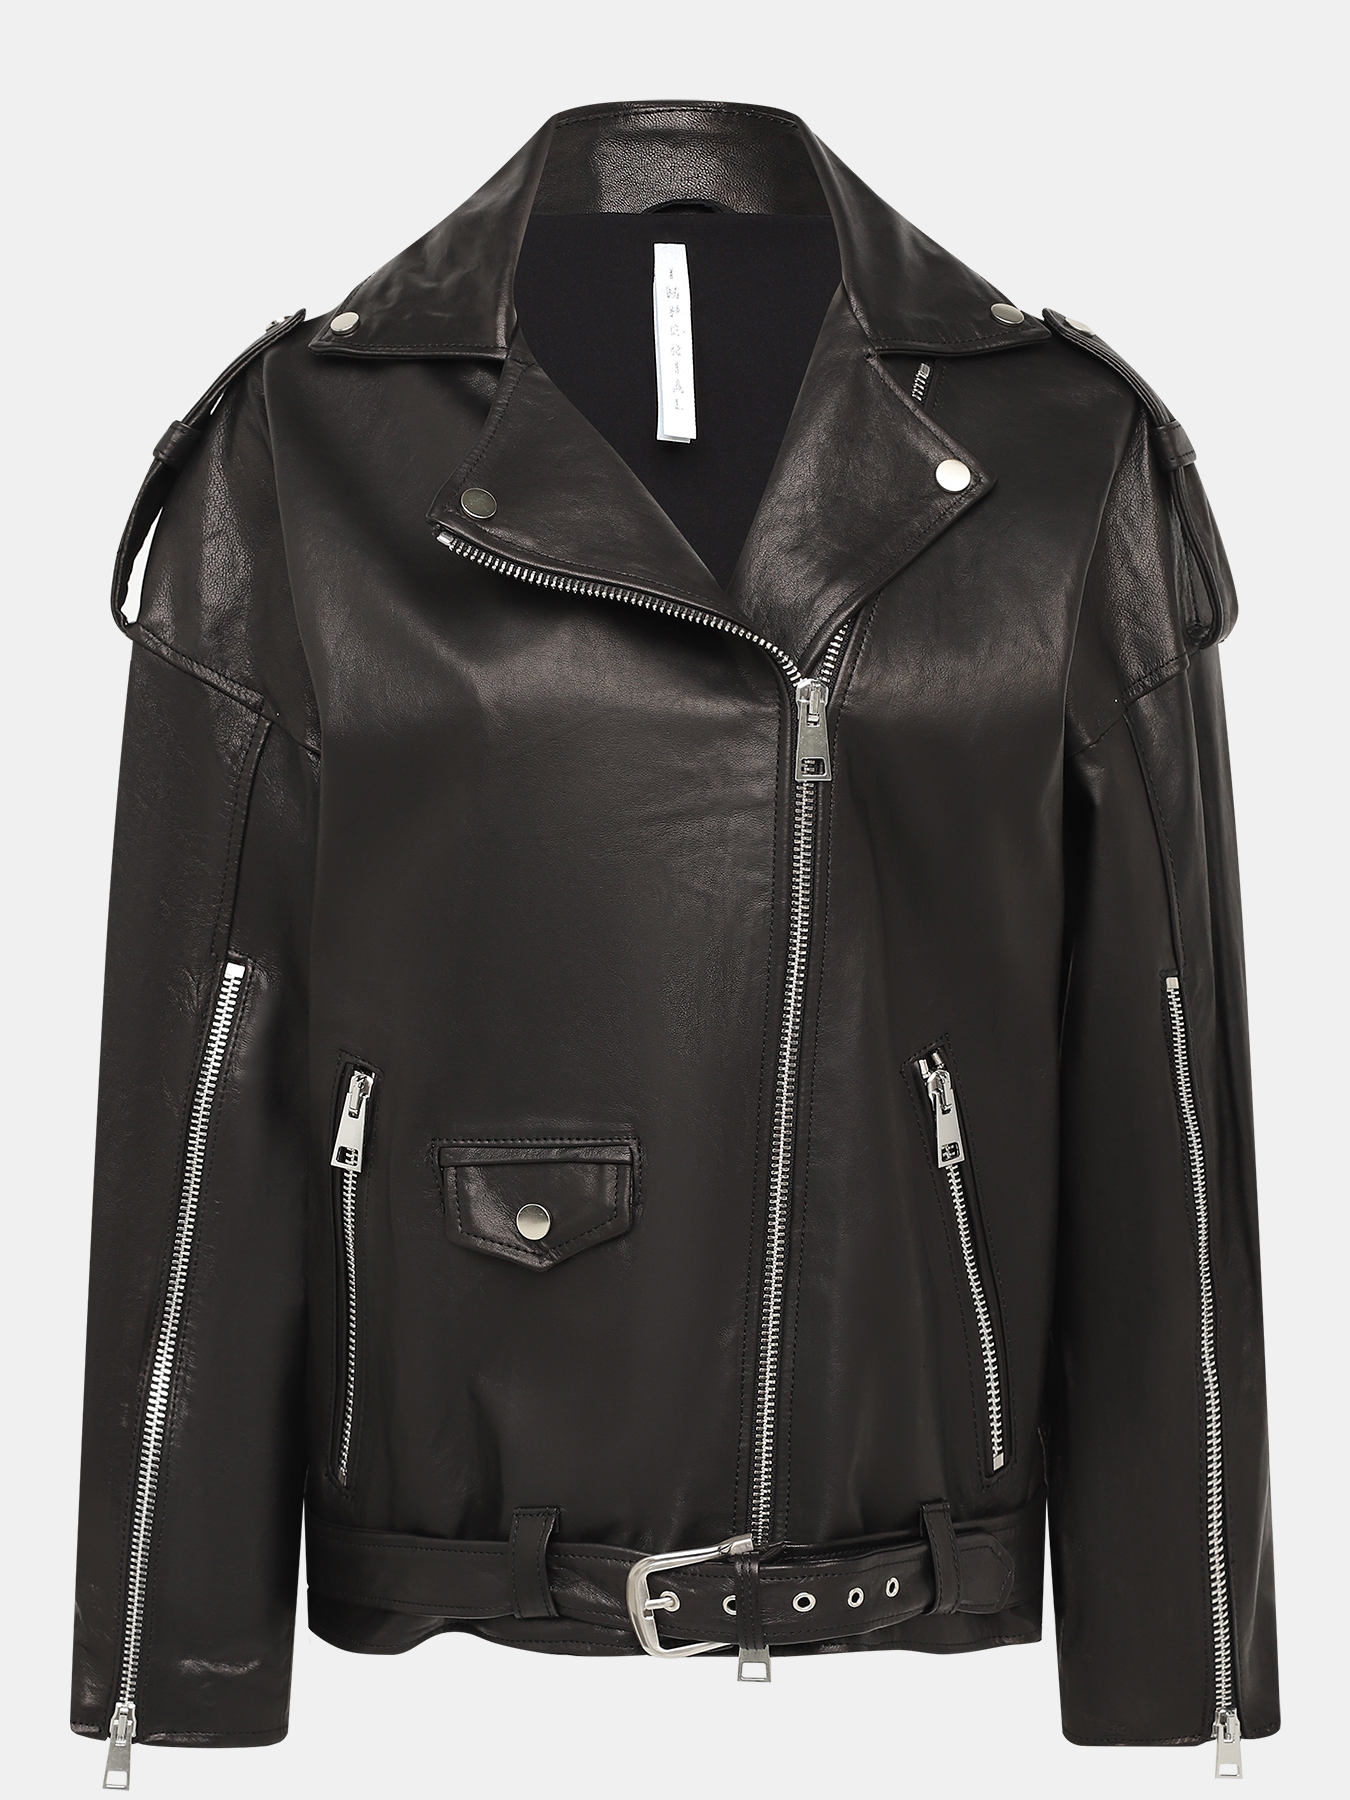 Кожаная куртка Imperial 424361-043, цвет черный, размер 44-46